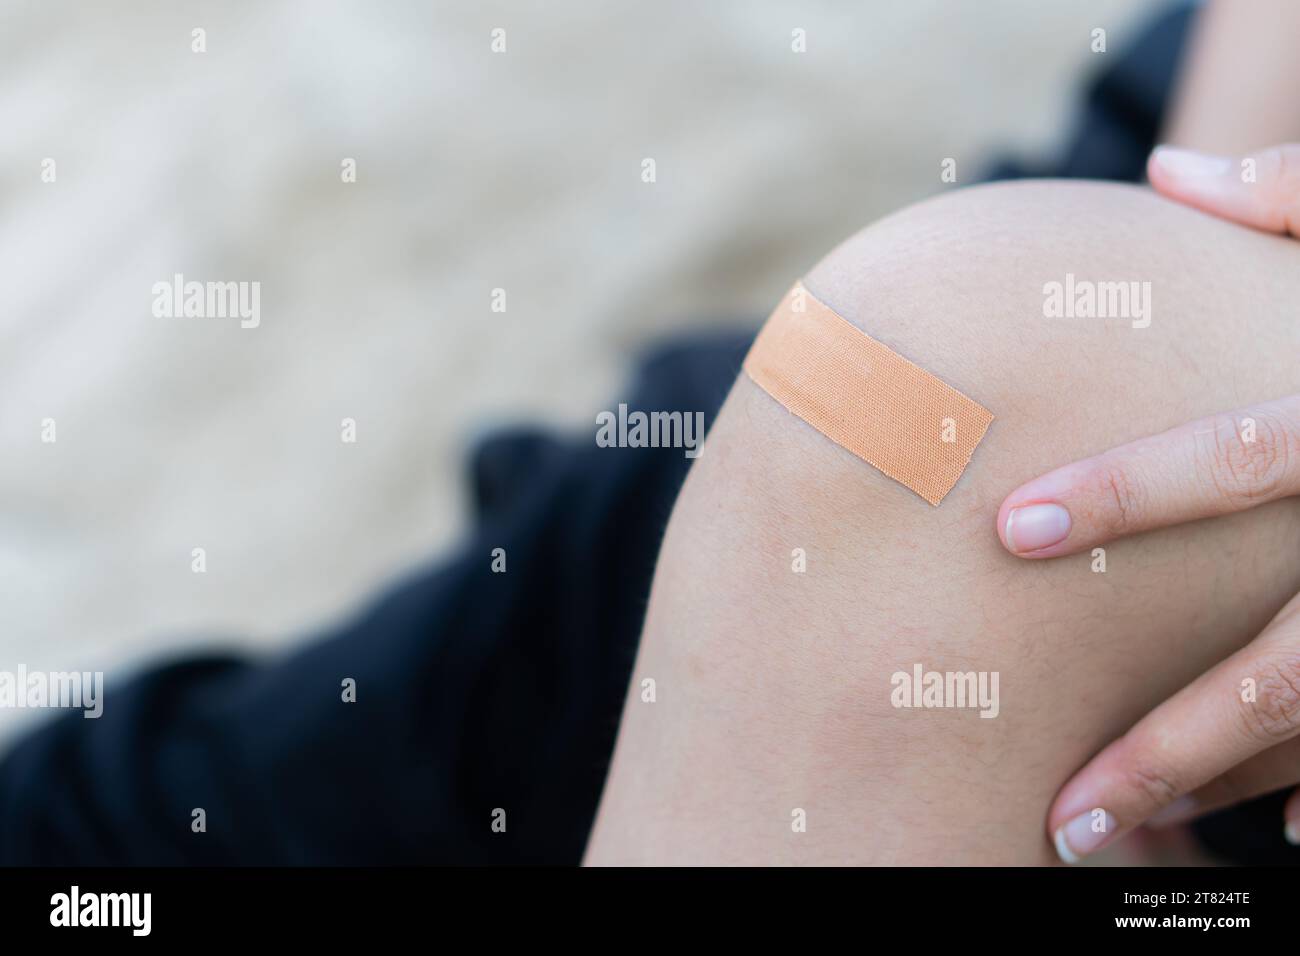 Woman applying plaster on knee Stock Photo